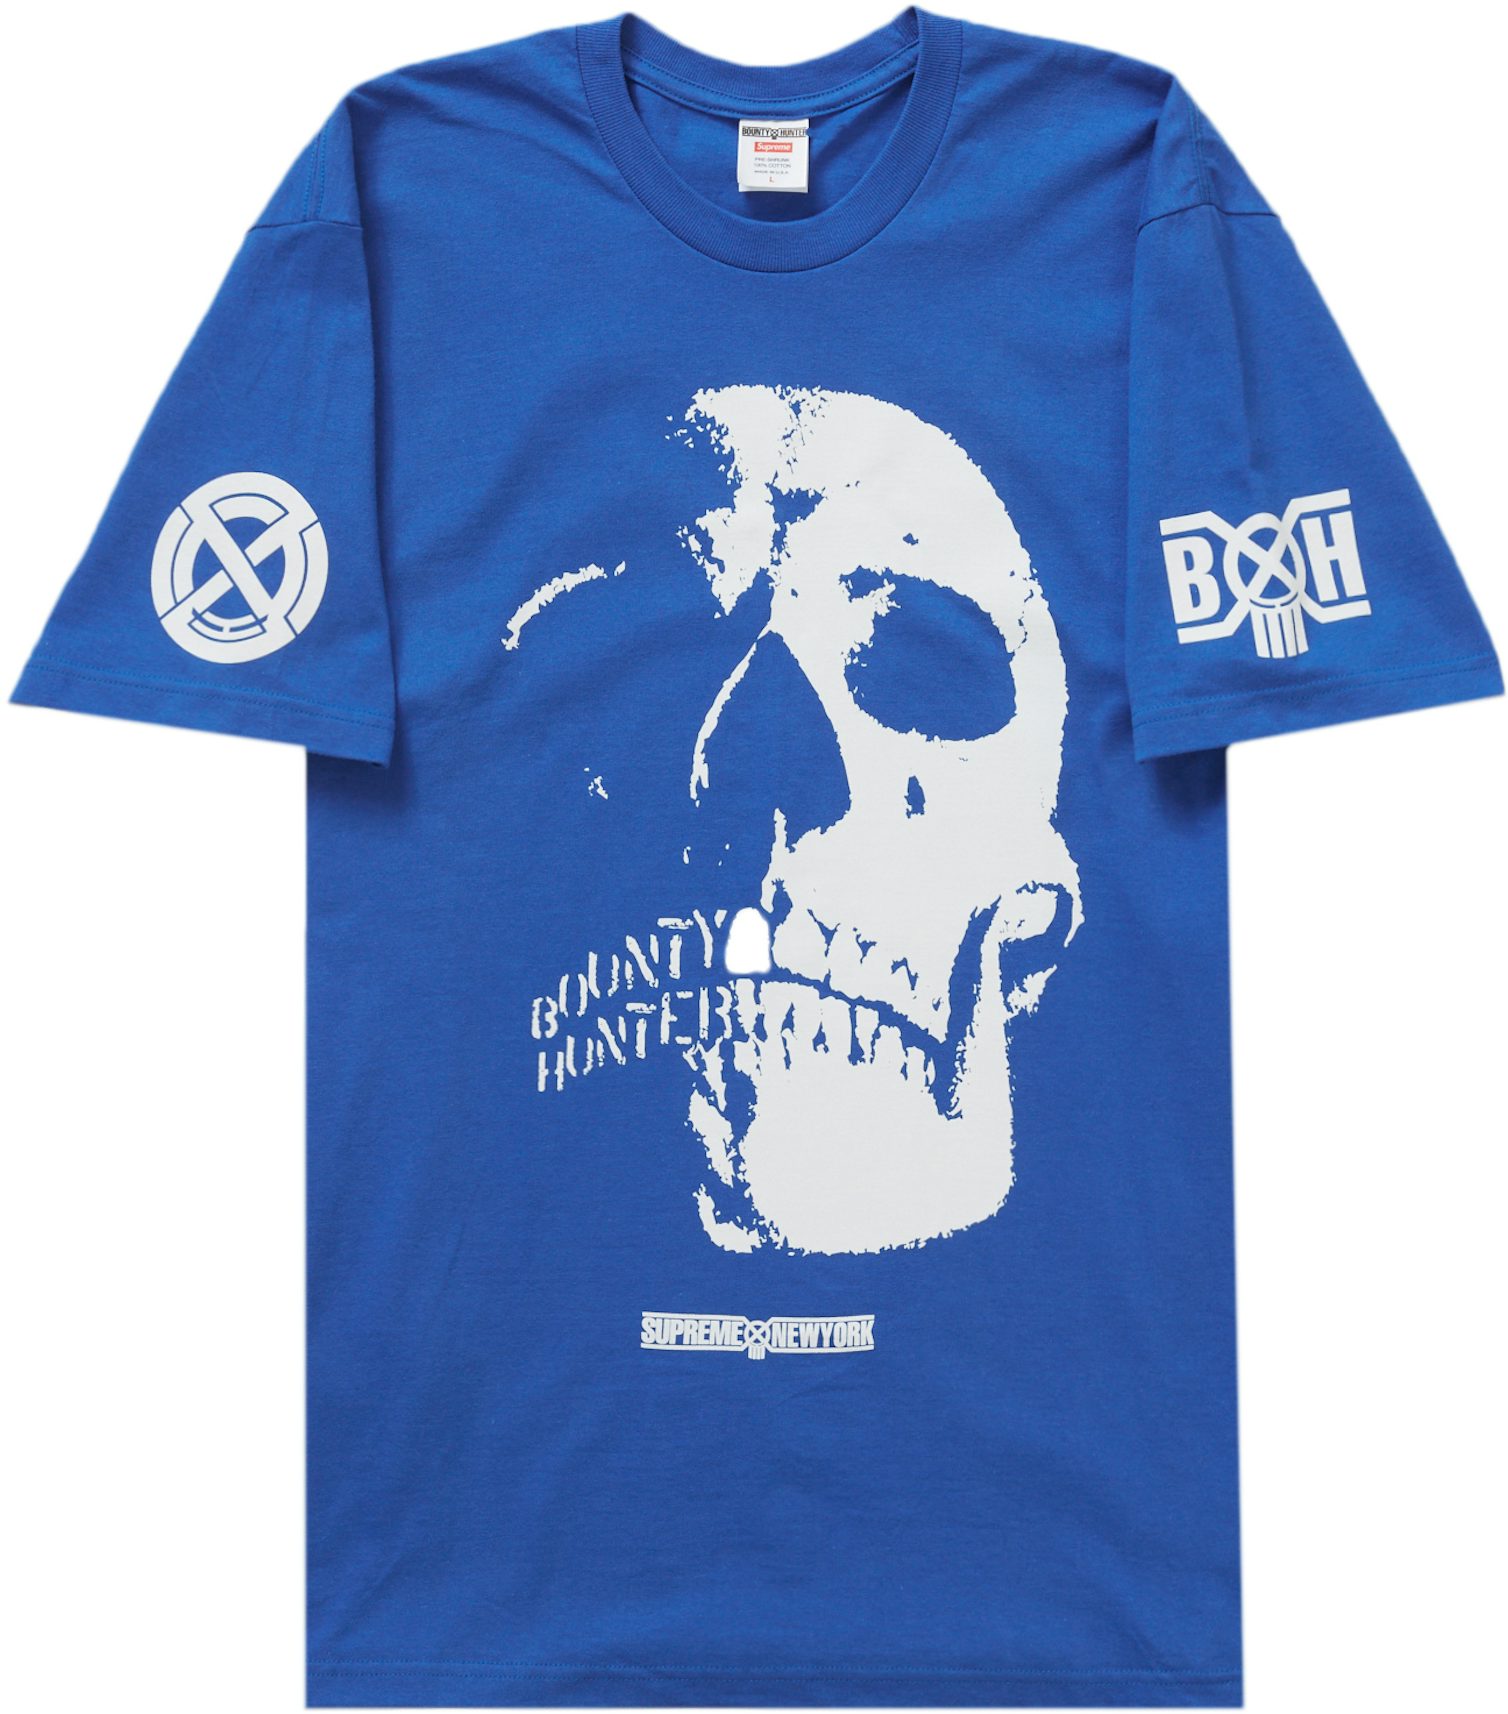 VTG Supreme New York limited T shirt sky blue